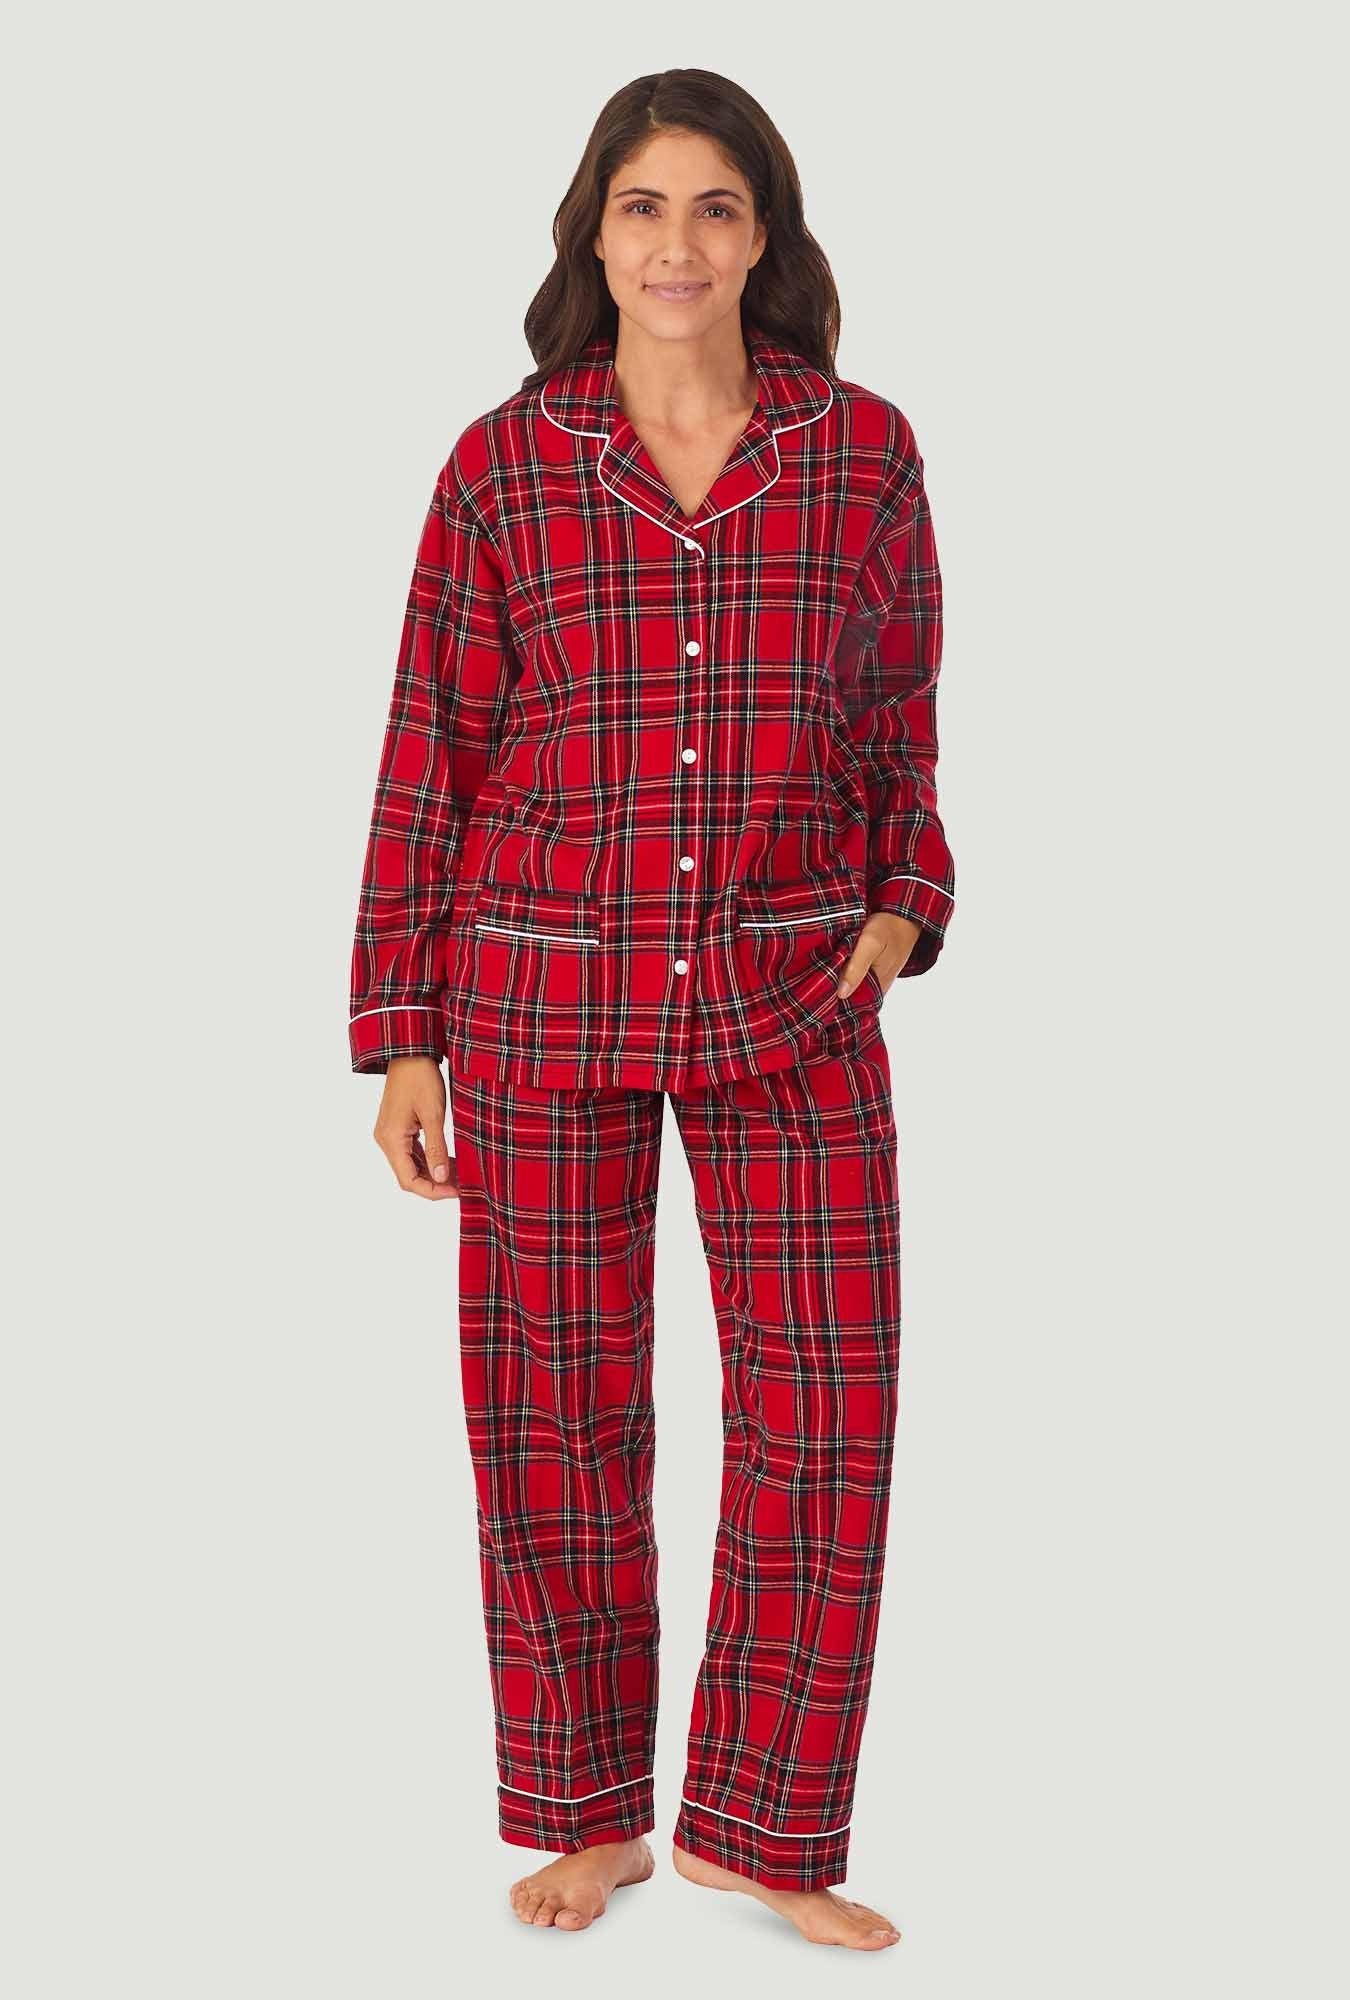 Red Tartan Women's Flannel Pajama